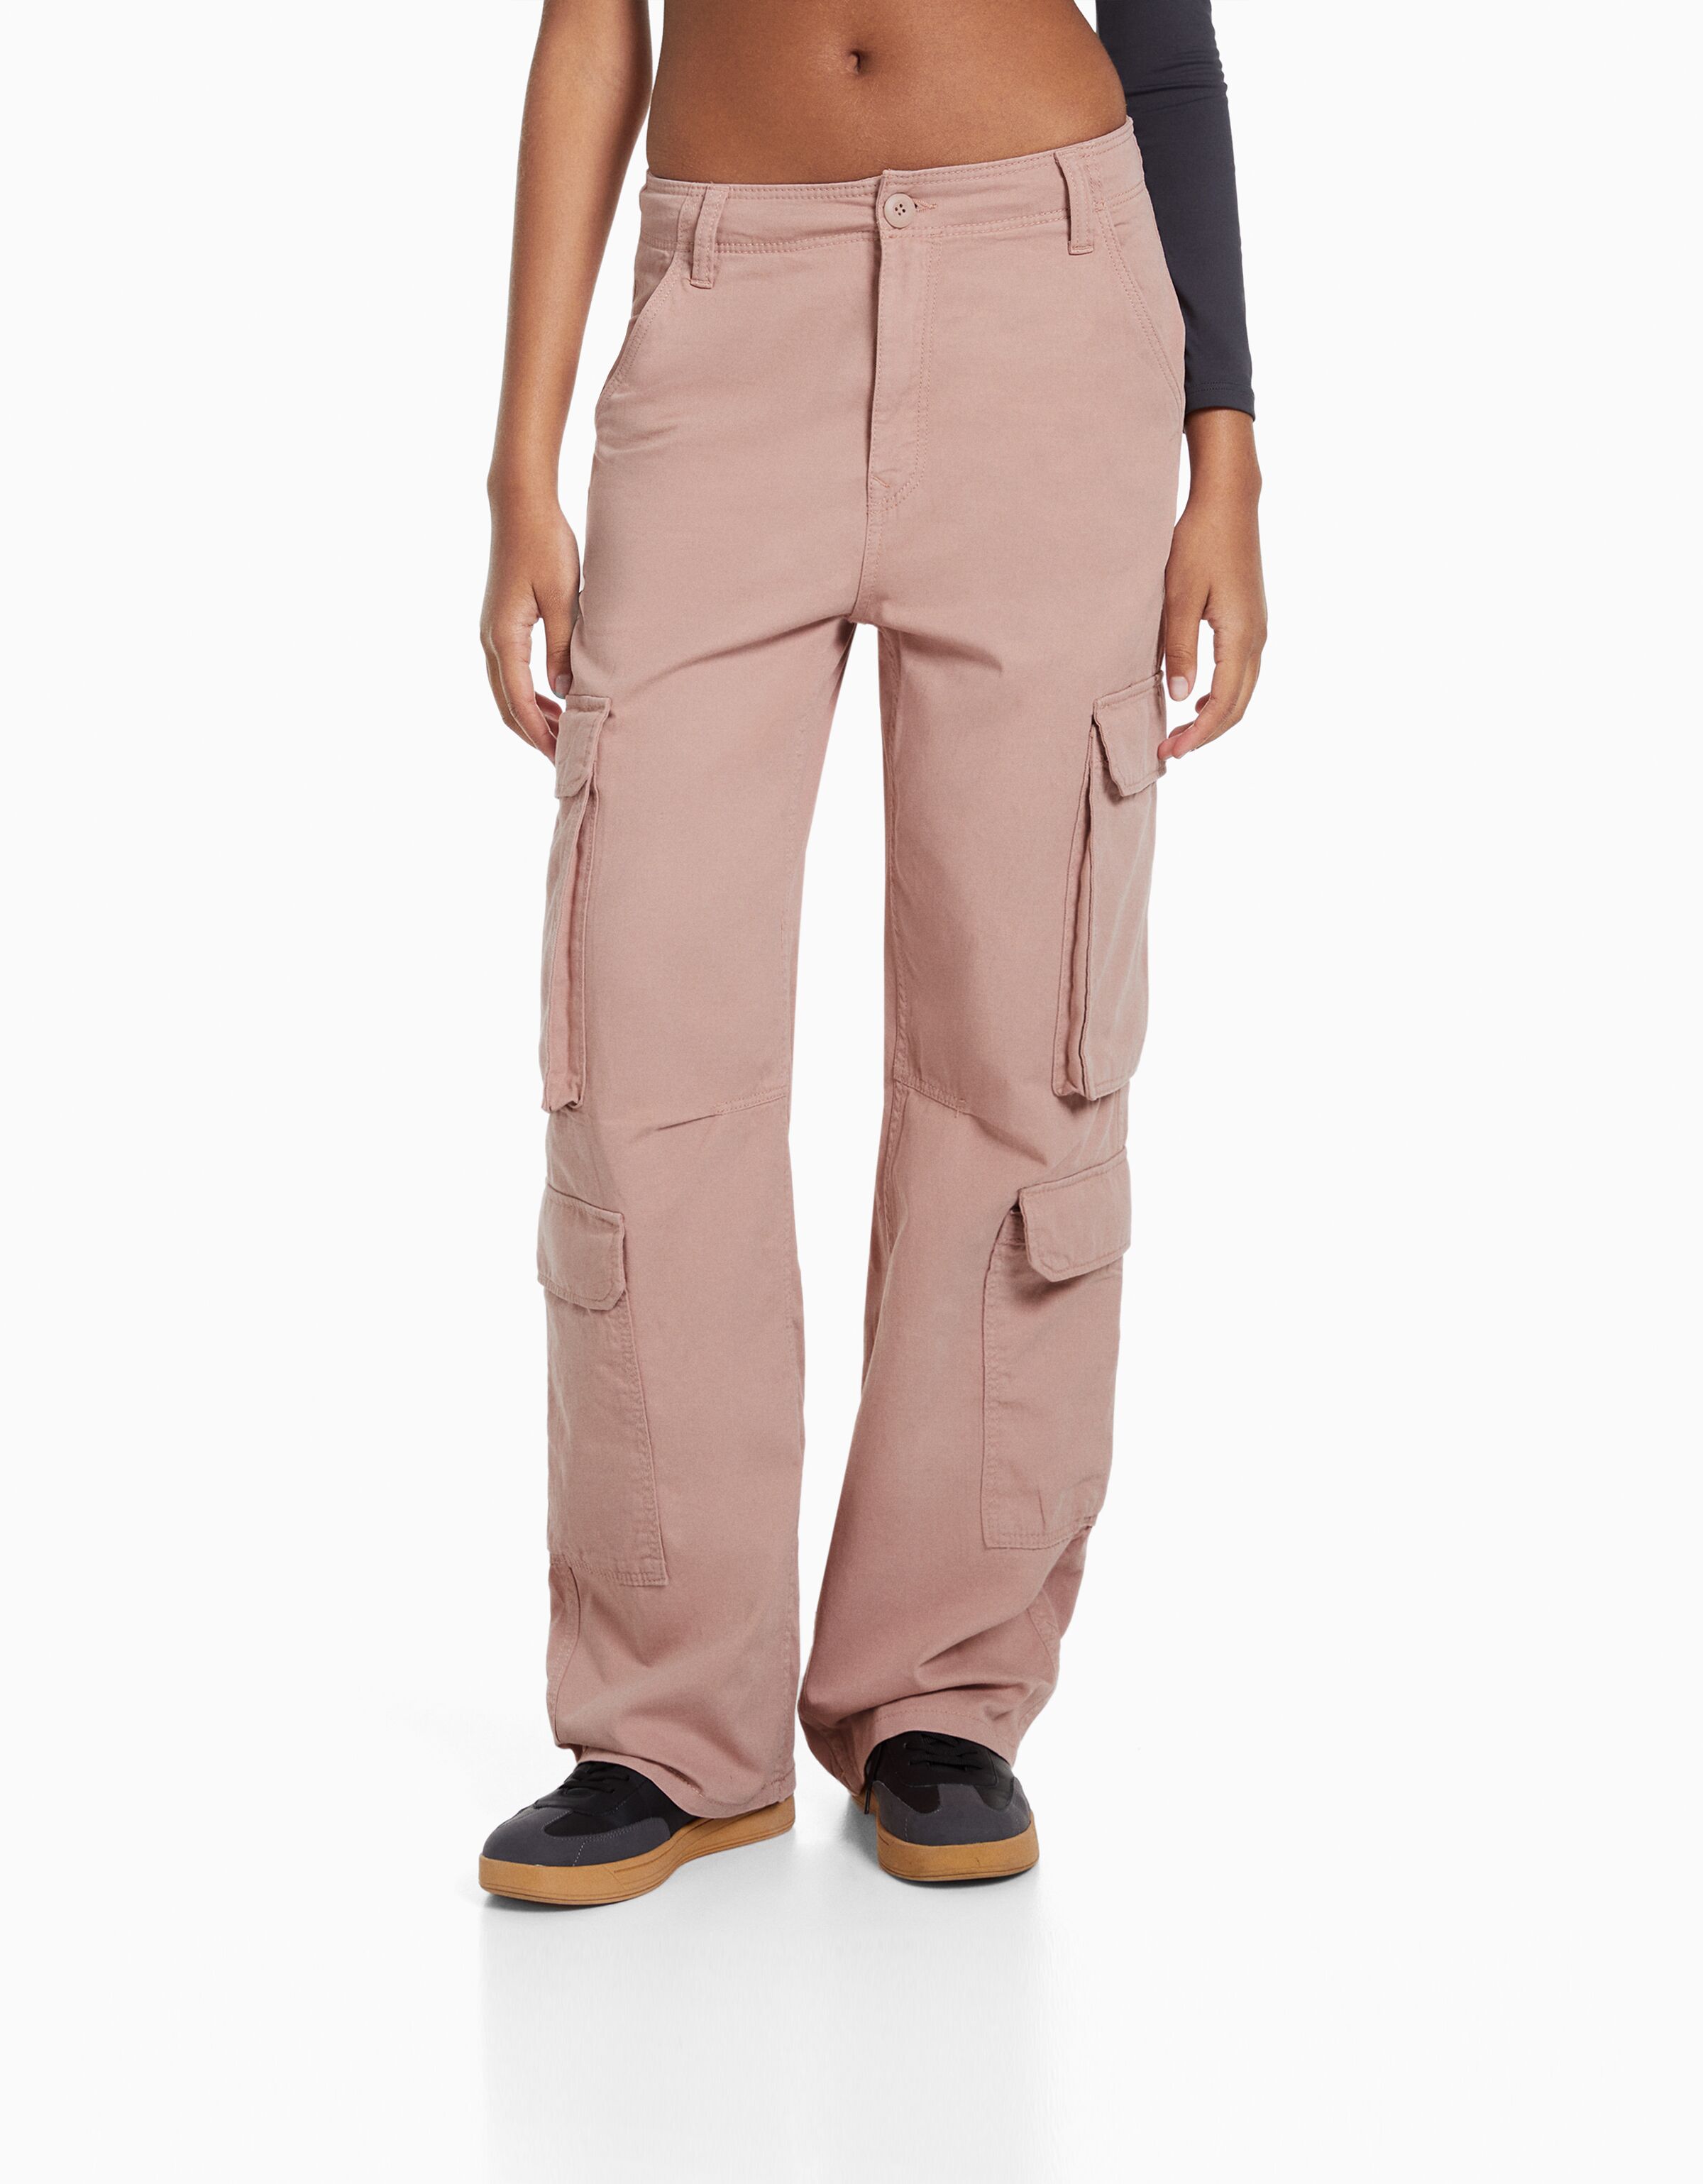 Adjustable multi-pocket twill cargo pants - Pants - Woman | Bershka